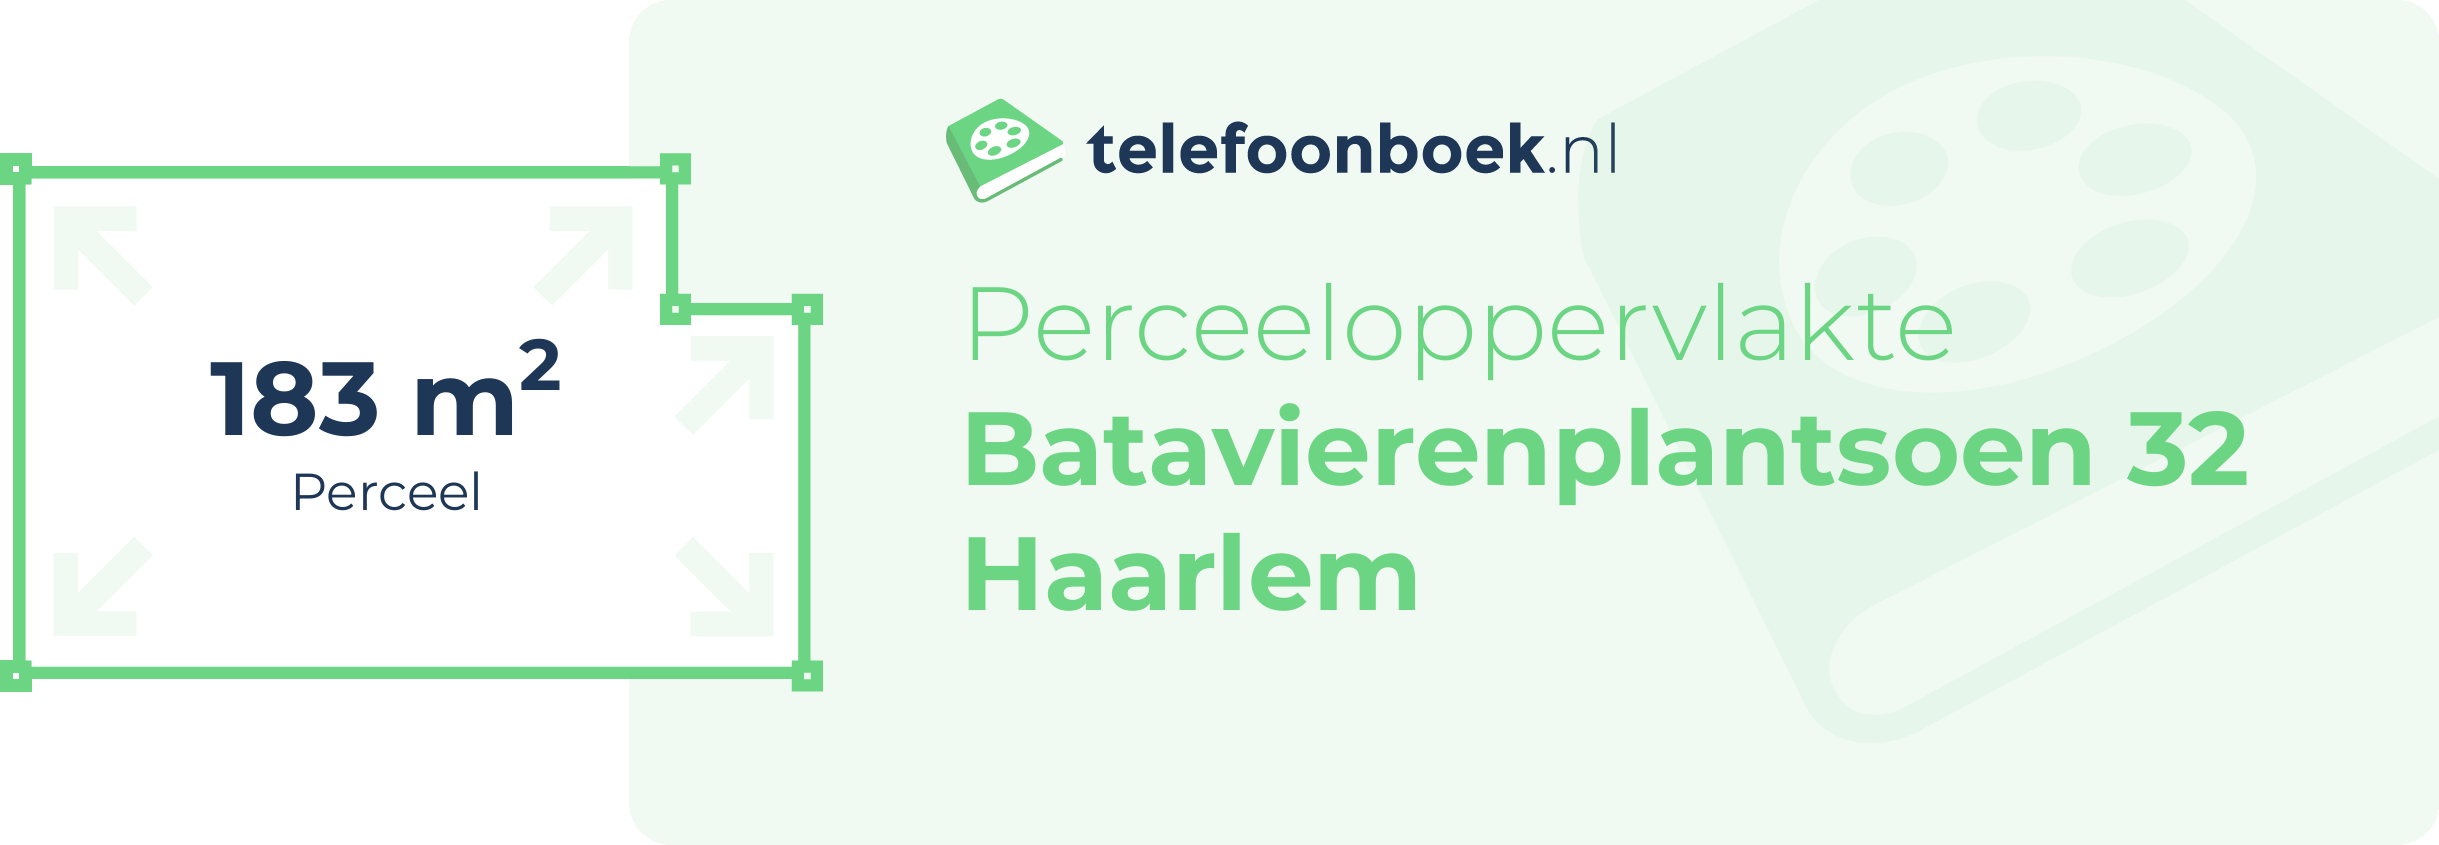 Perceeloppervlakte Batavierenplantsoen 32 Haarlem